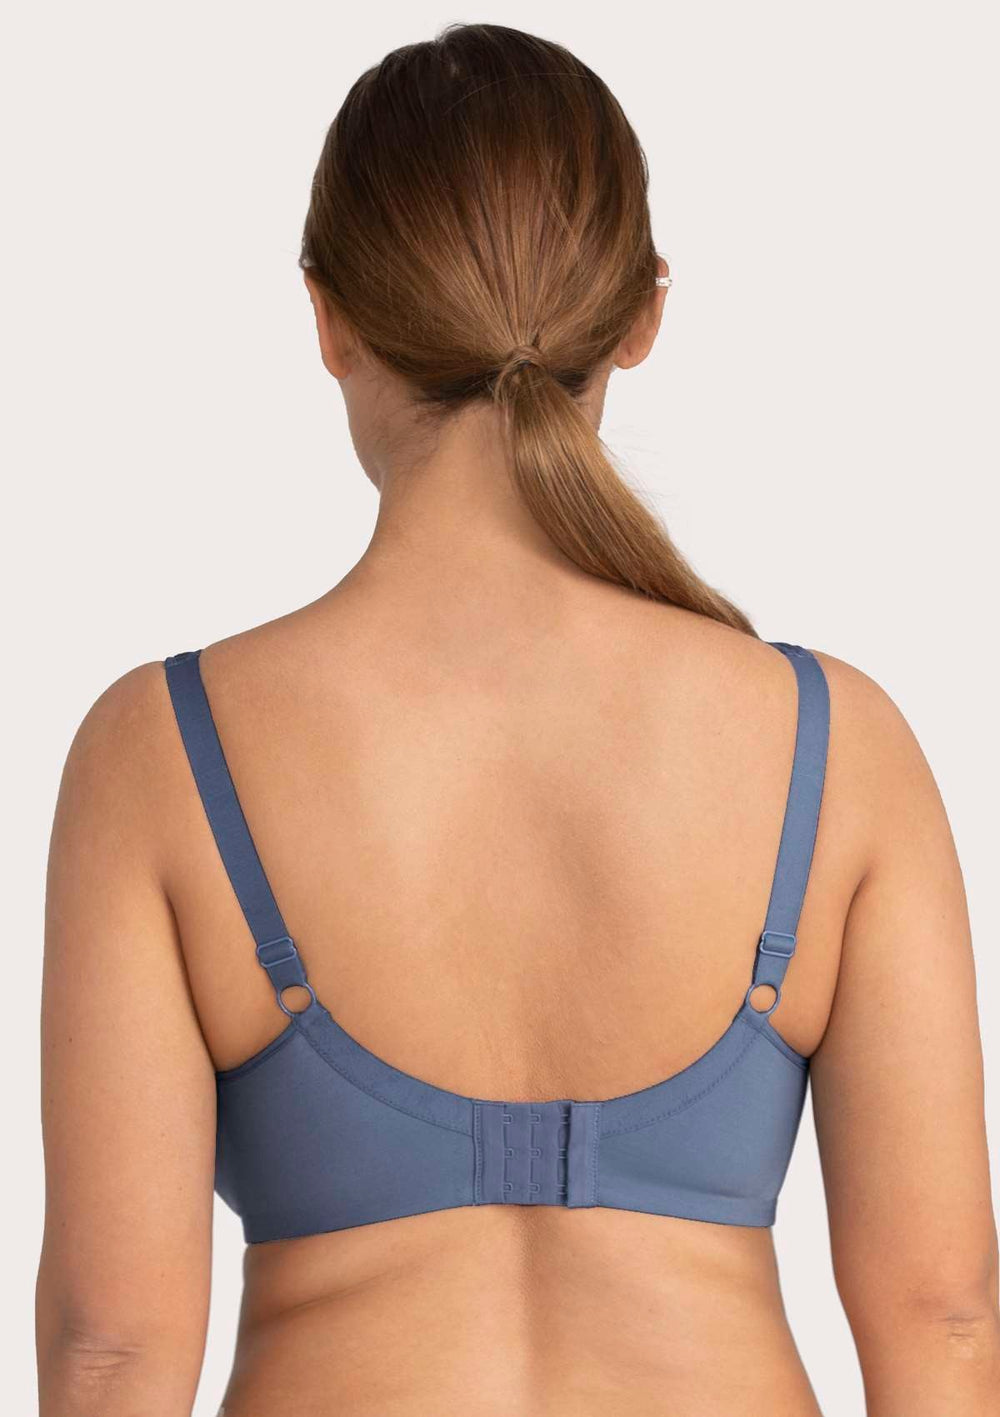 $5/mo - Finance HSIA Women's Minimizer Bra Unlined Underwire Full Figure  Lace Bra Plus Size Full Coverage Unpadded Bra